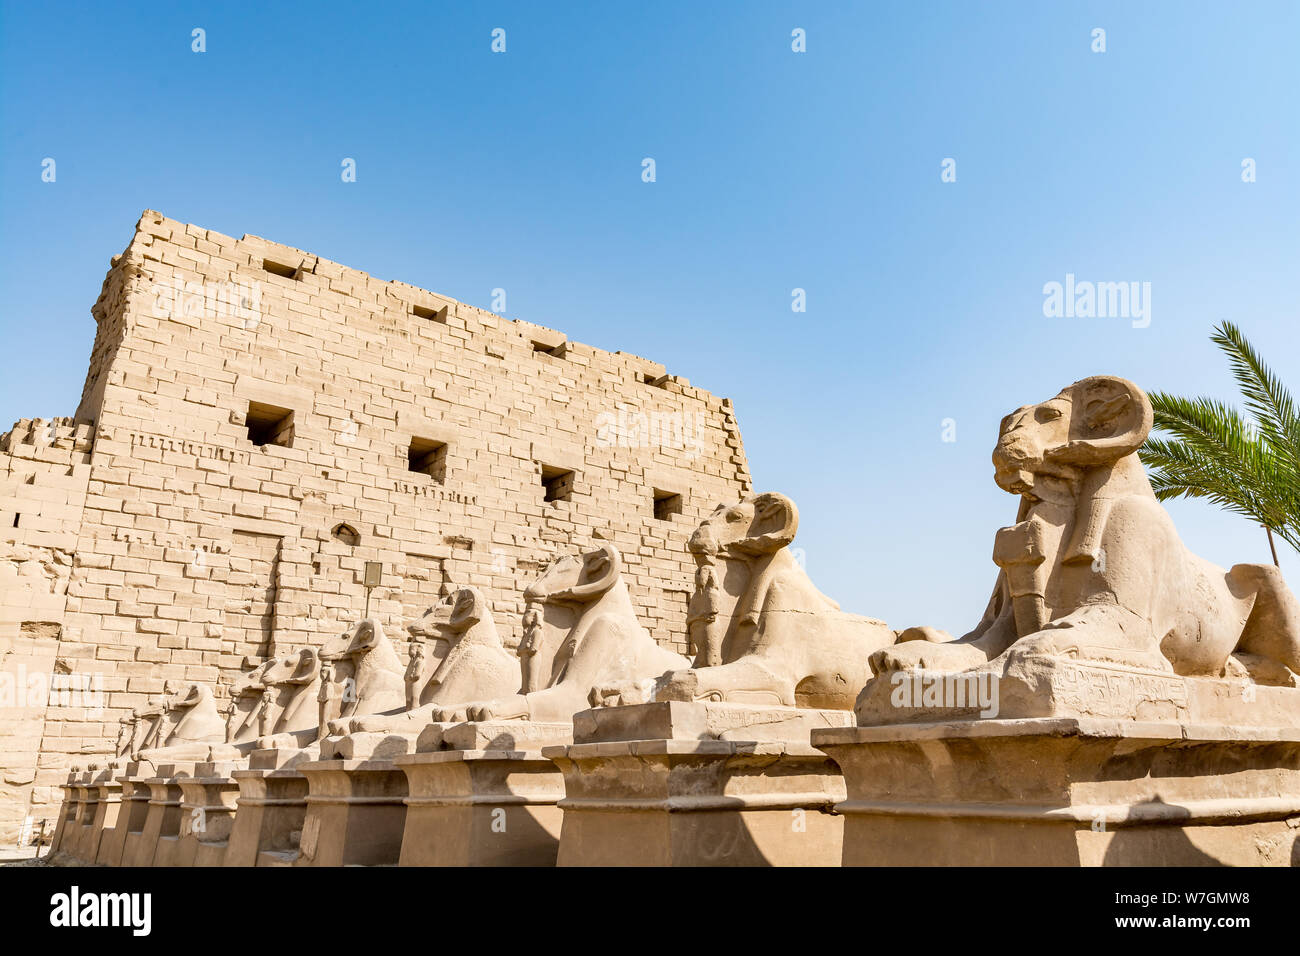 Ram statutes at the entrance to the Karnak temple, Luxor, Egypt Stock Photo